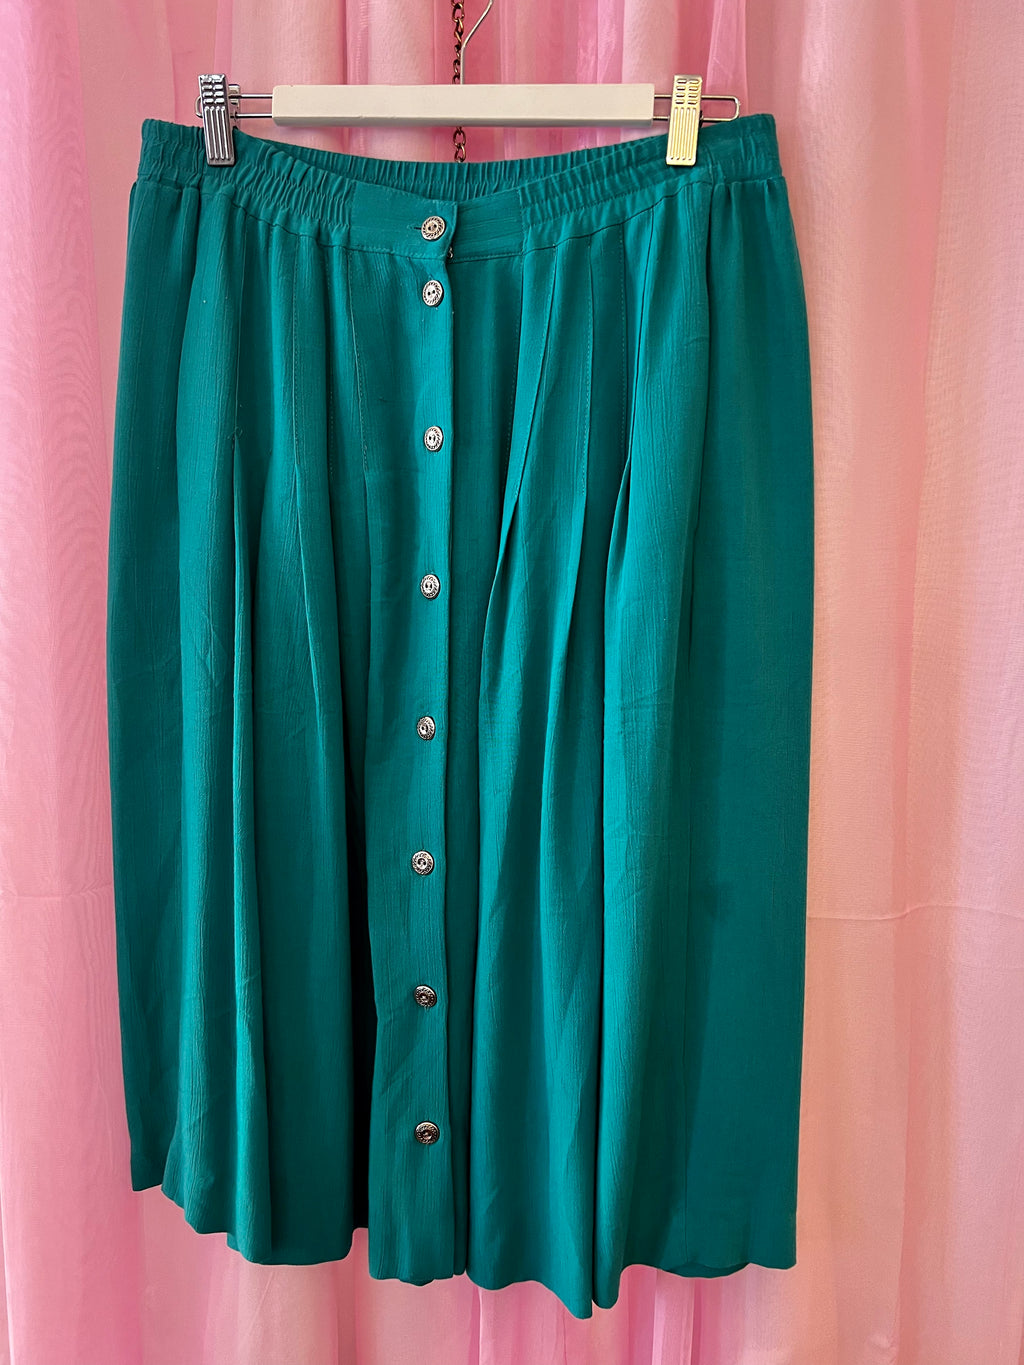 Vintage Teal Skirt